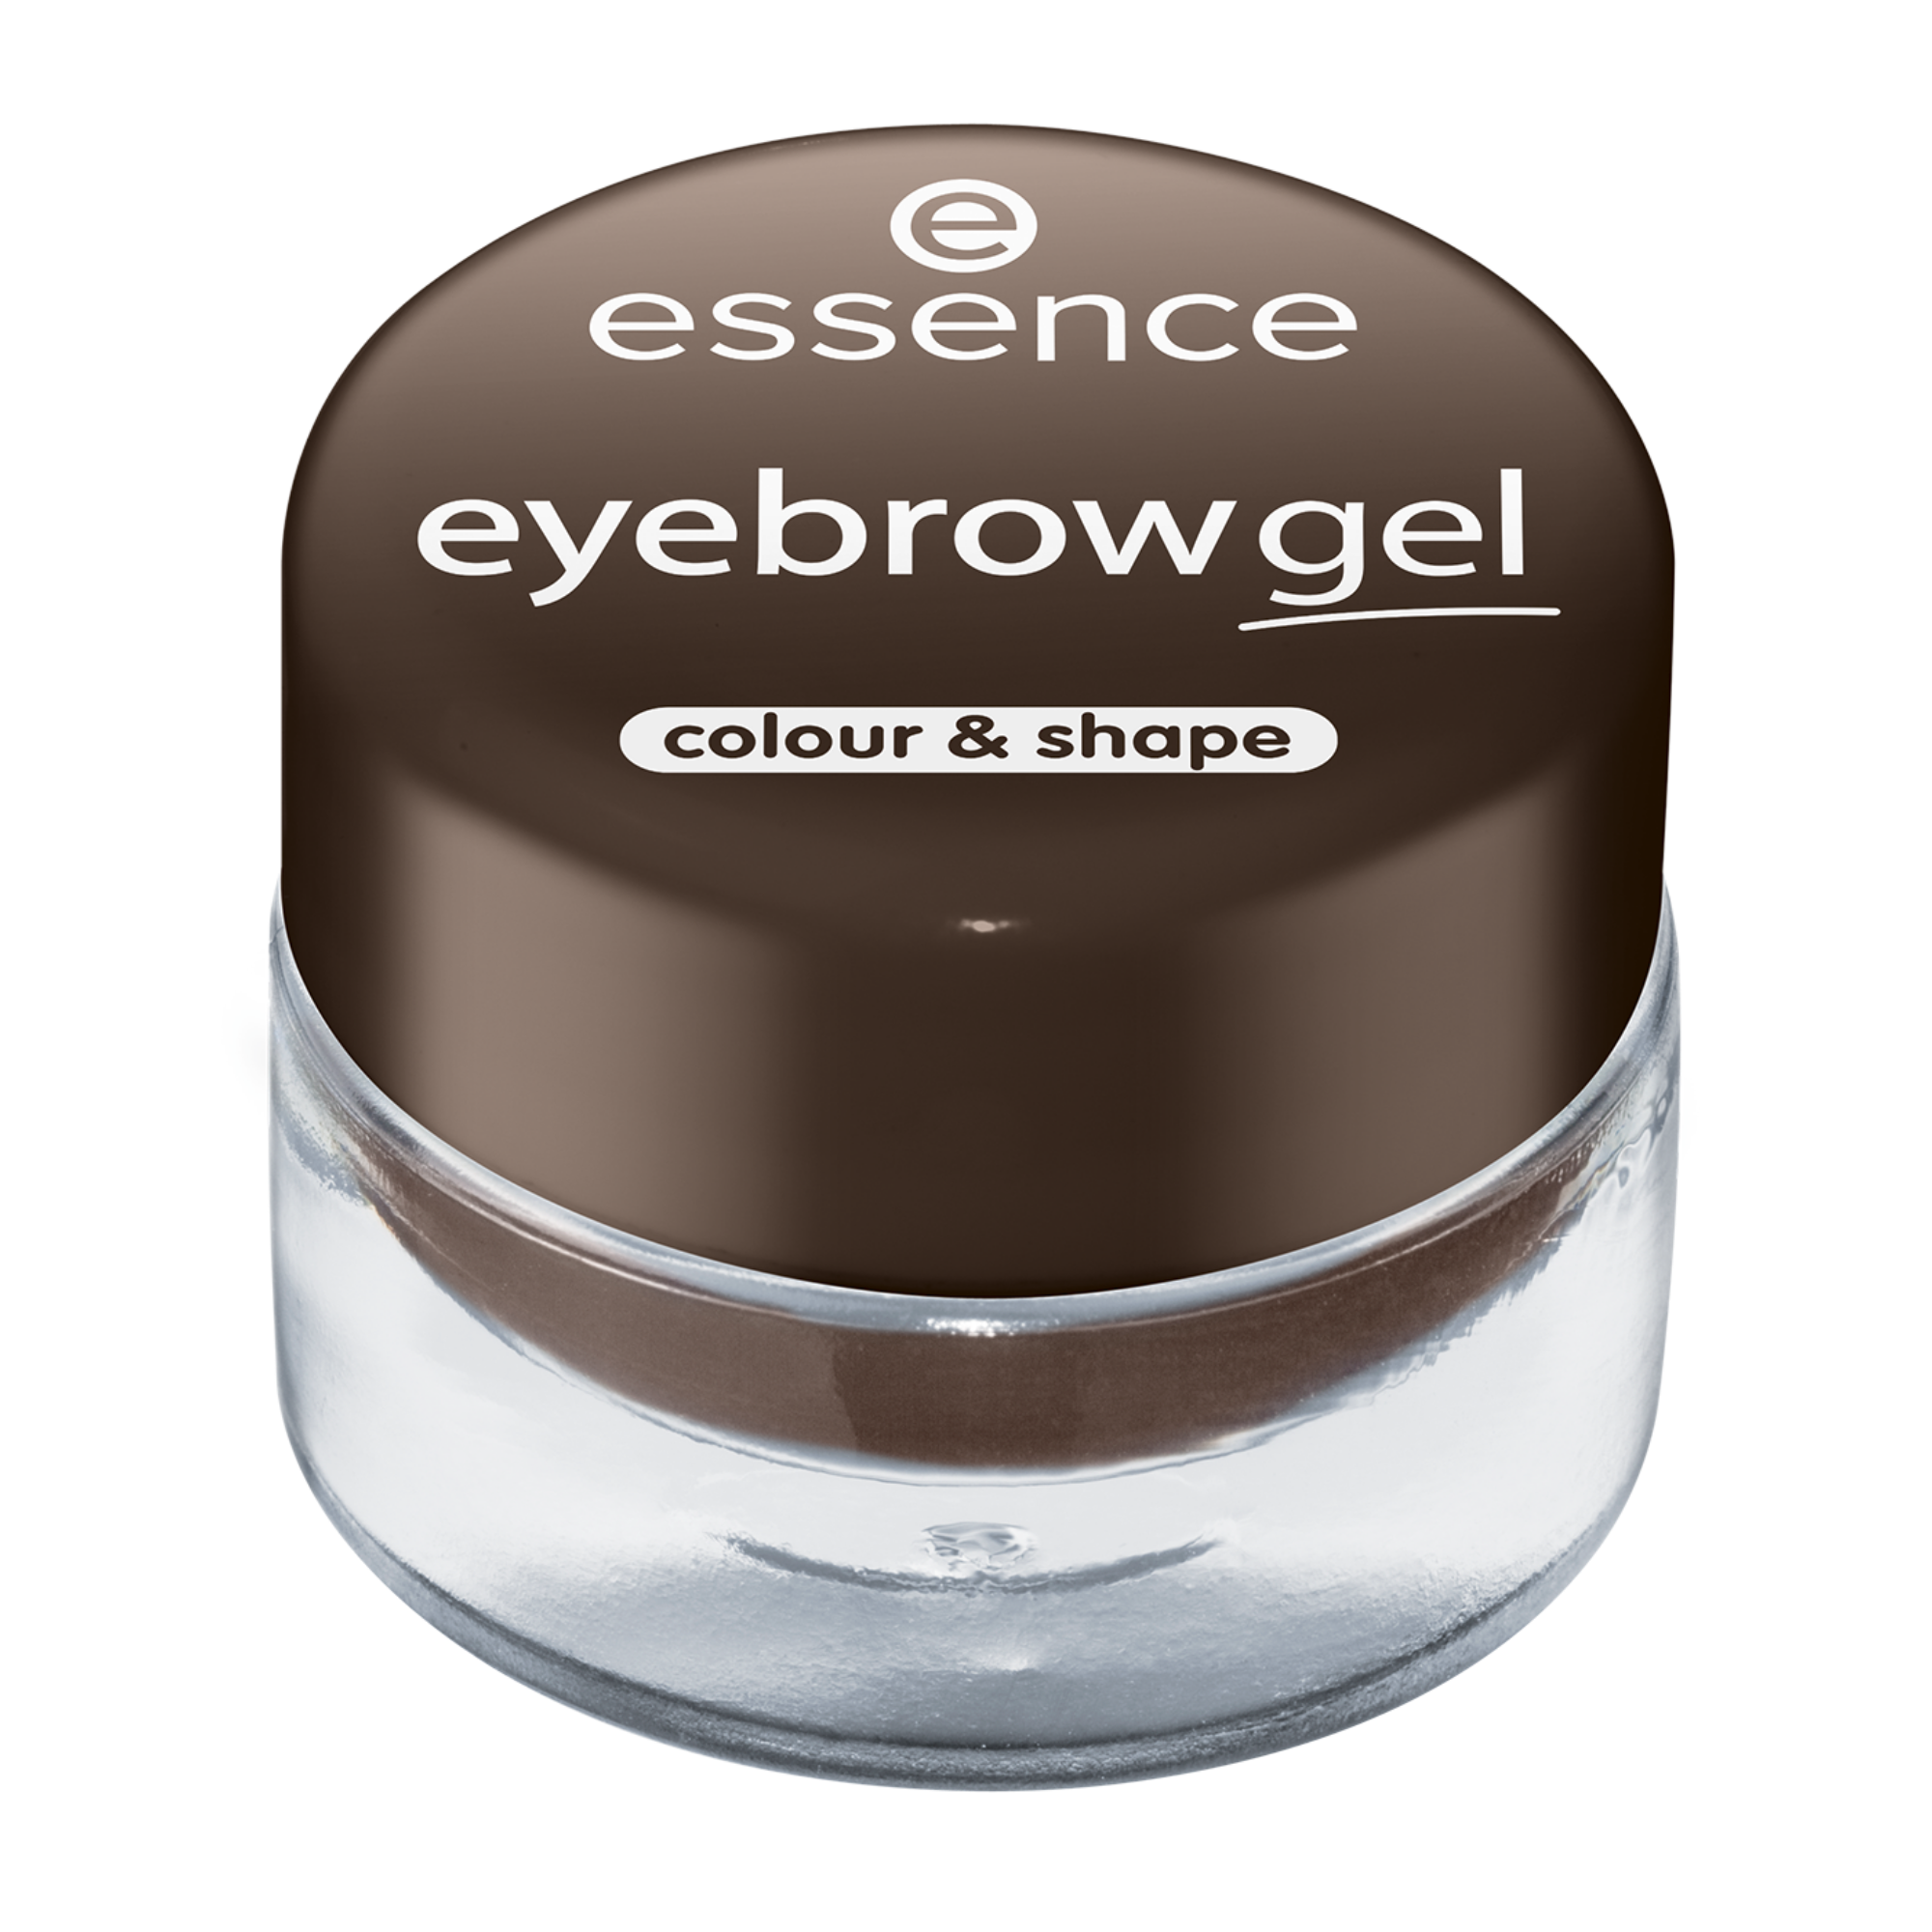 Acheter en ligne les produits essence eyebrow DESIGNER brosse sourcils dark  chocolate brown